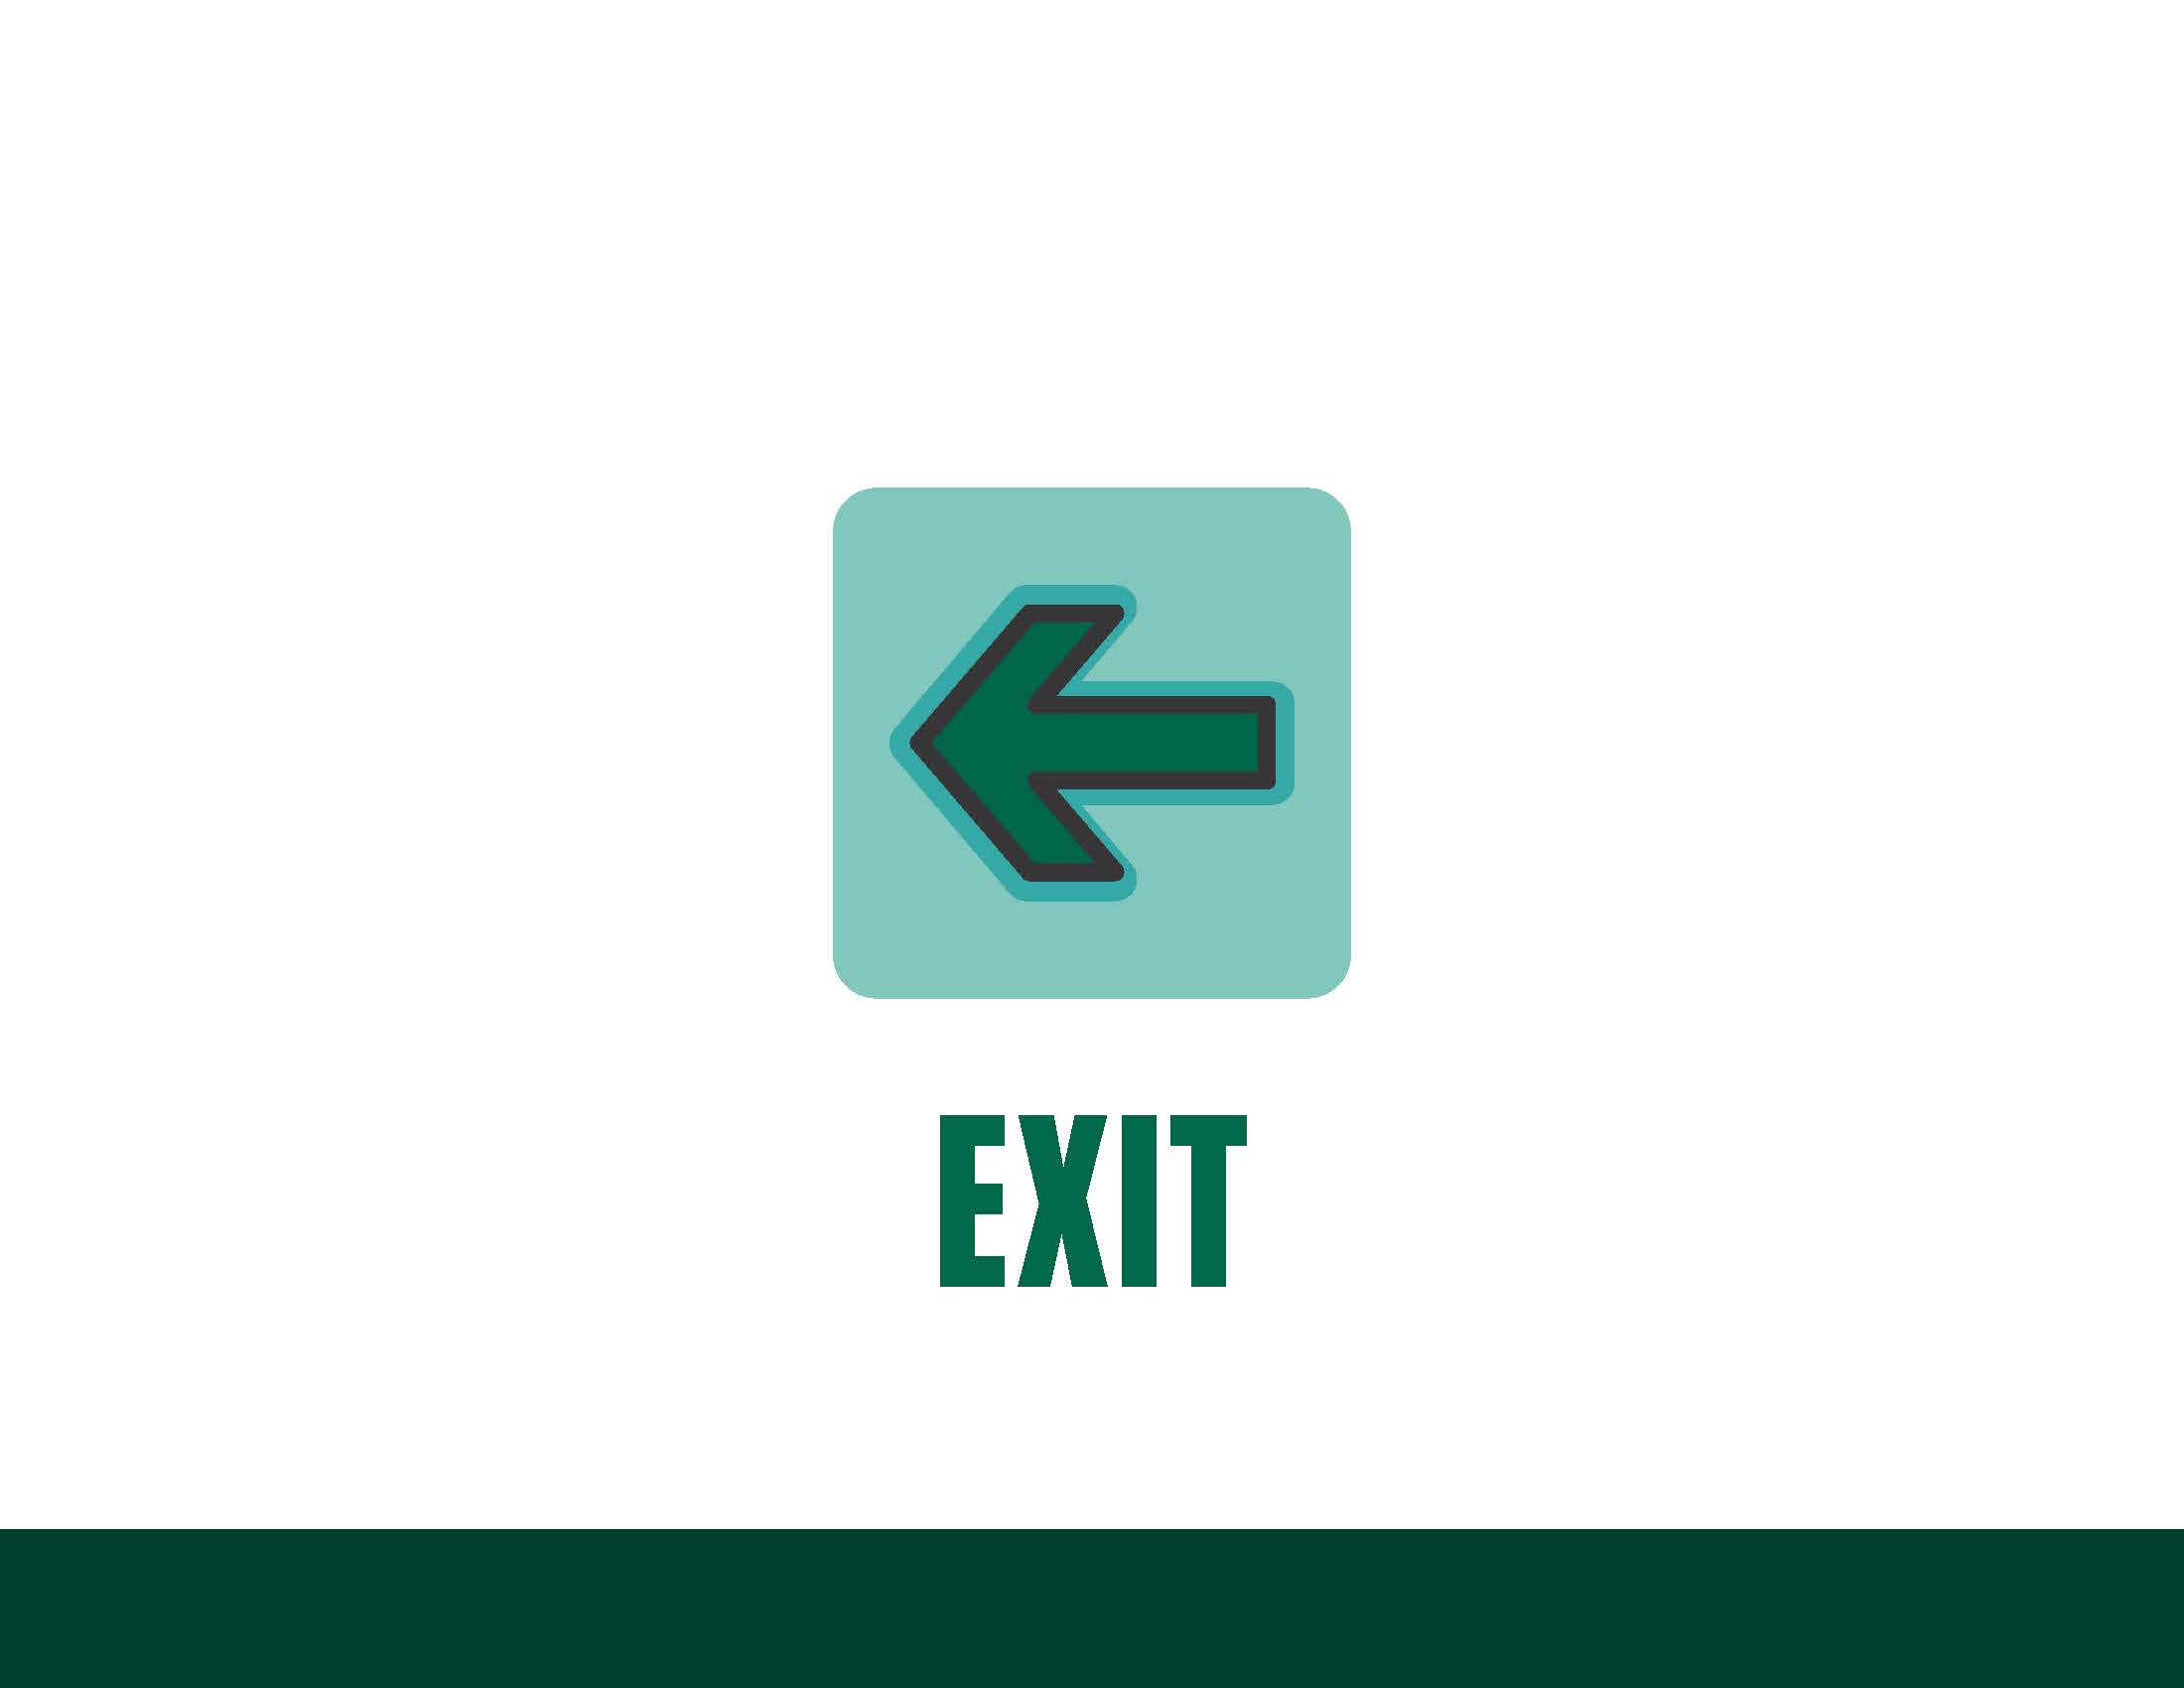 COVID sign - exit, left arrow